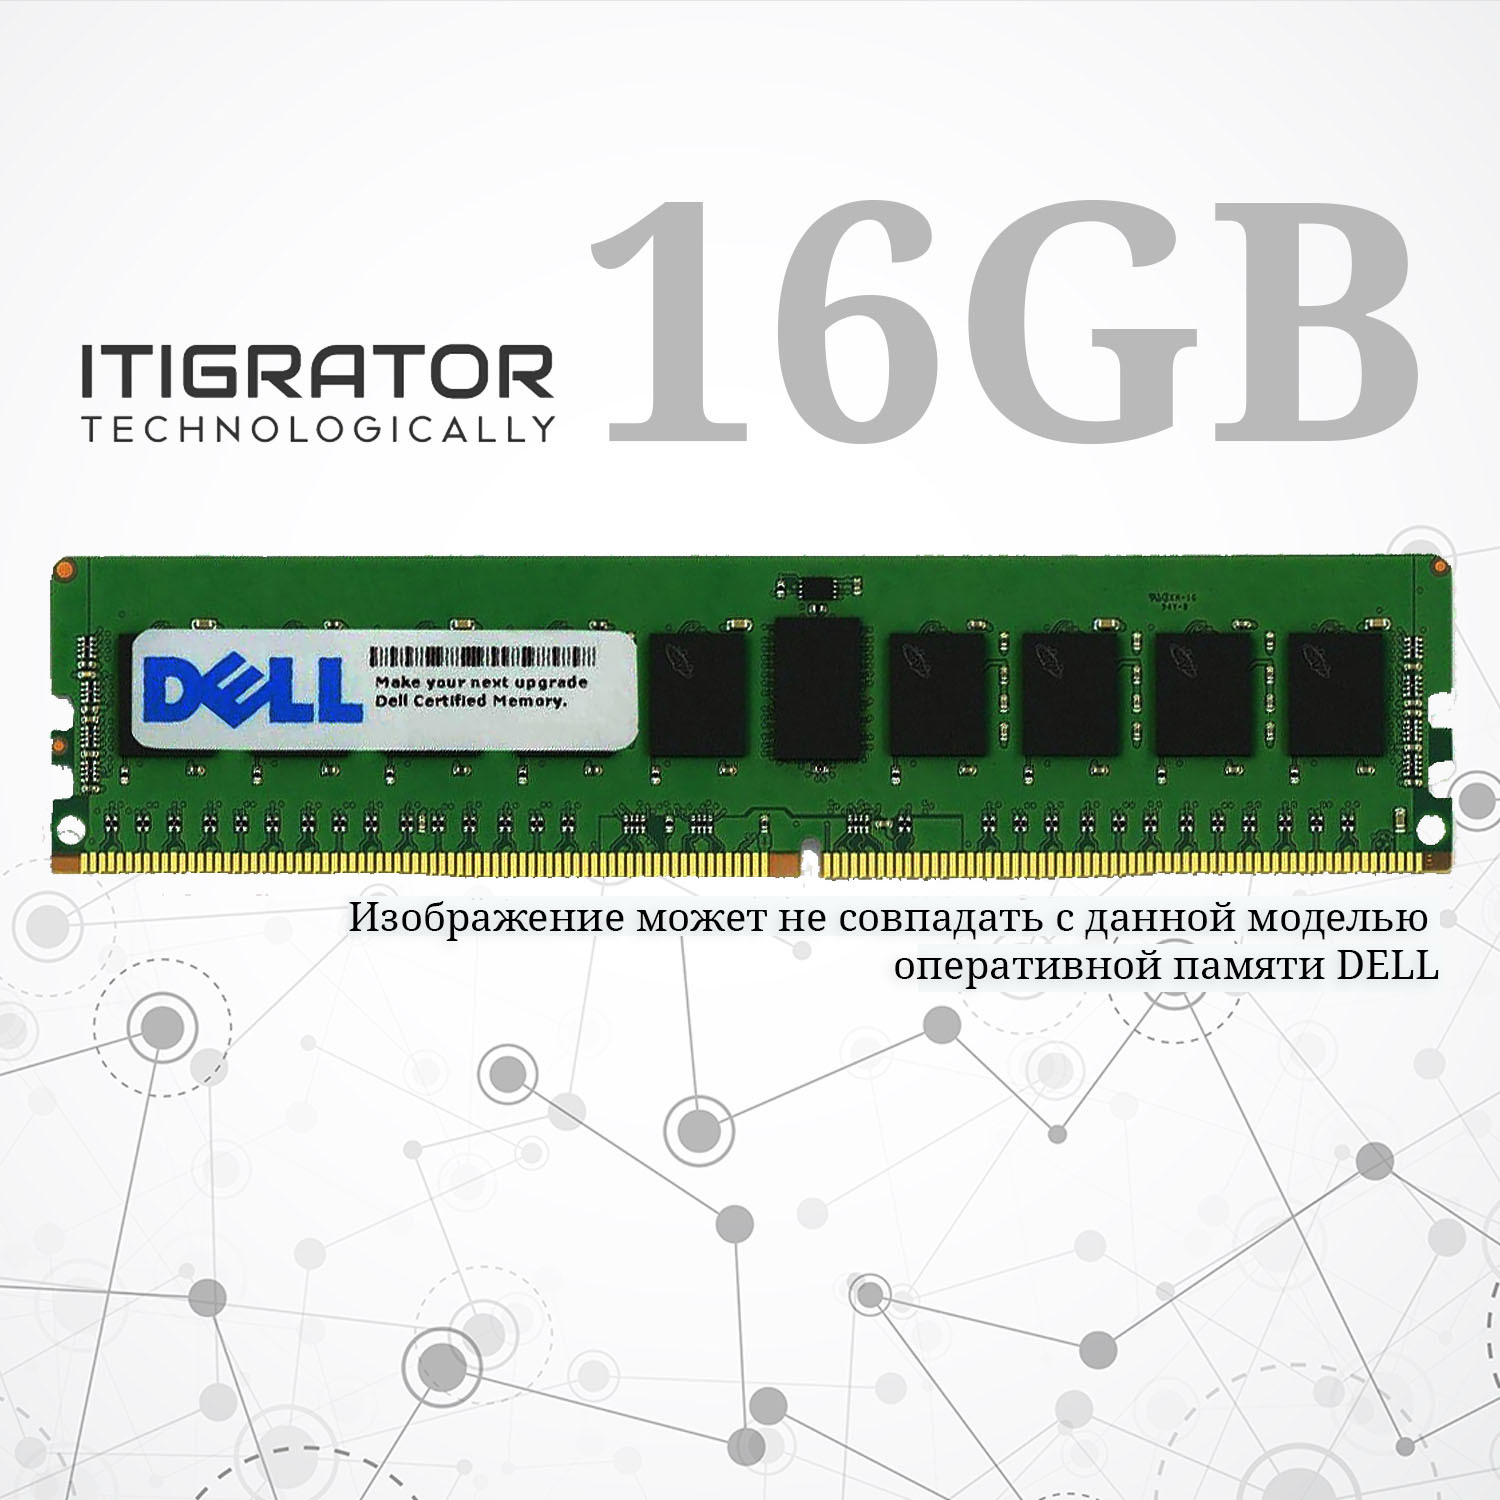 Оперативная память DELL 16GB DDR3 SDRAM MEMORY MODULE [JDF1M]